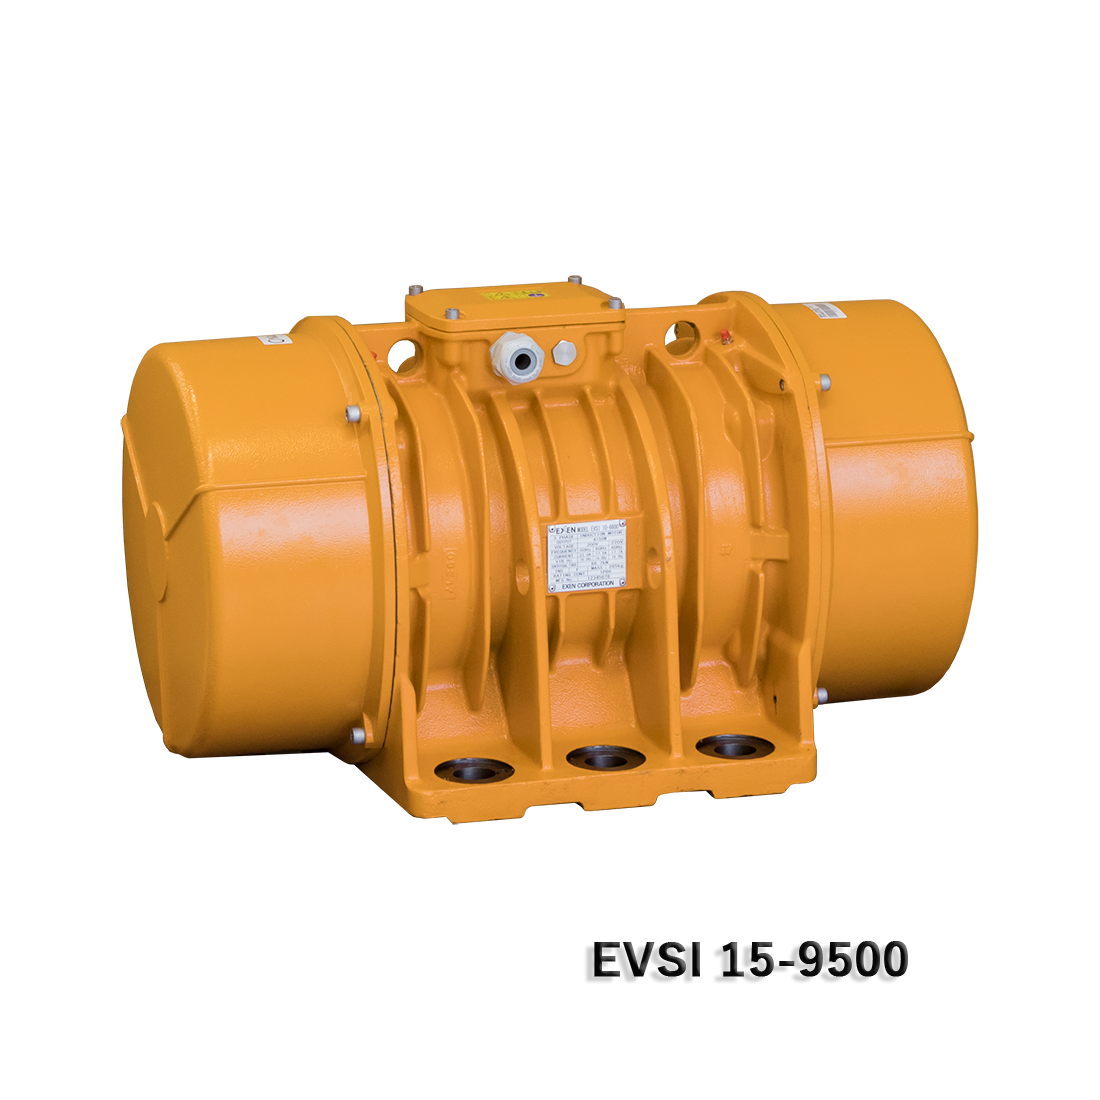 Vibration motor EVSI ･ EVUR 15 series (4-pole 3-phase 200 - 440V)